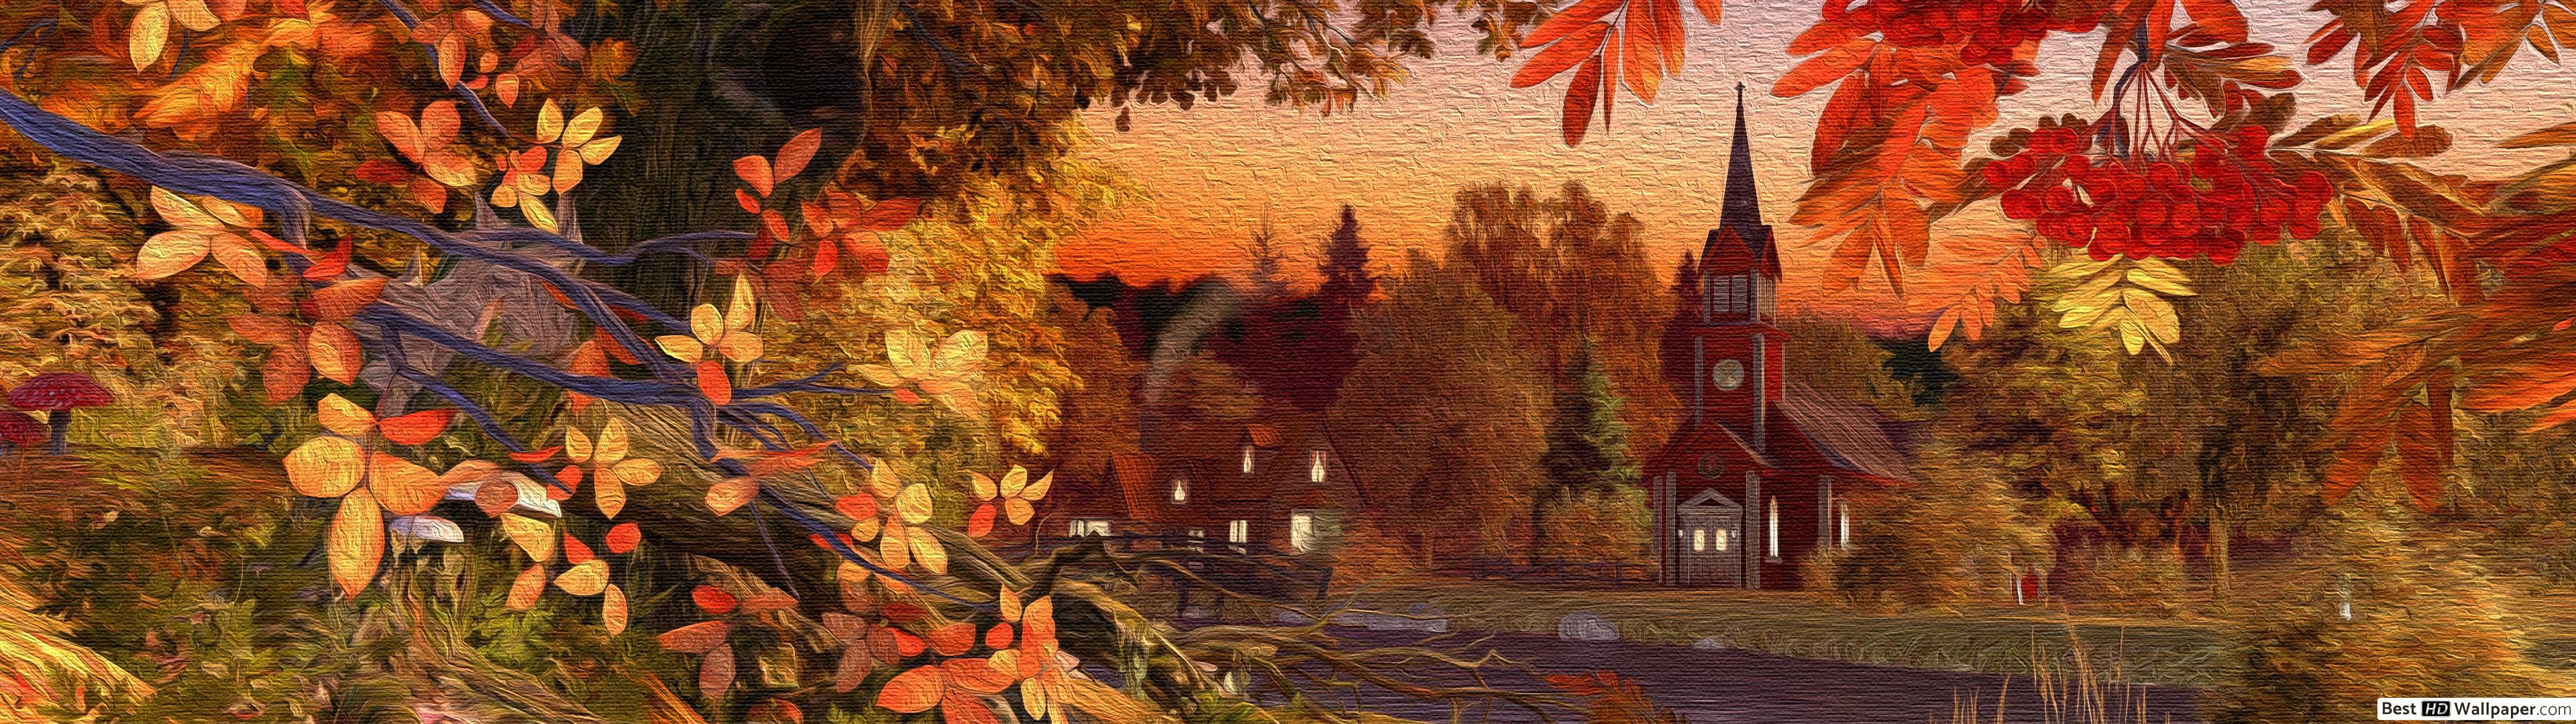 1080 autumn background